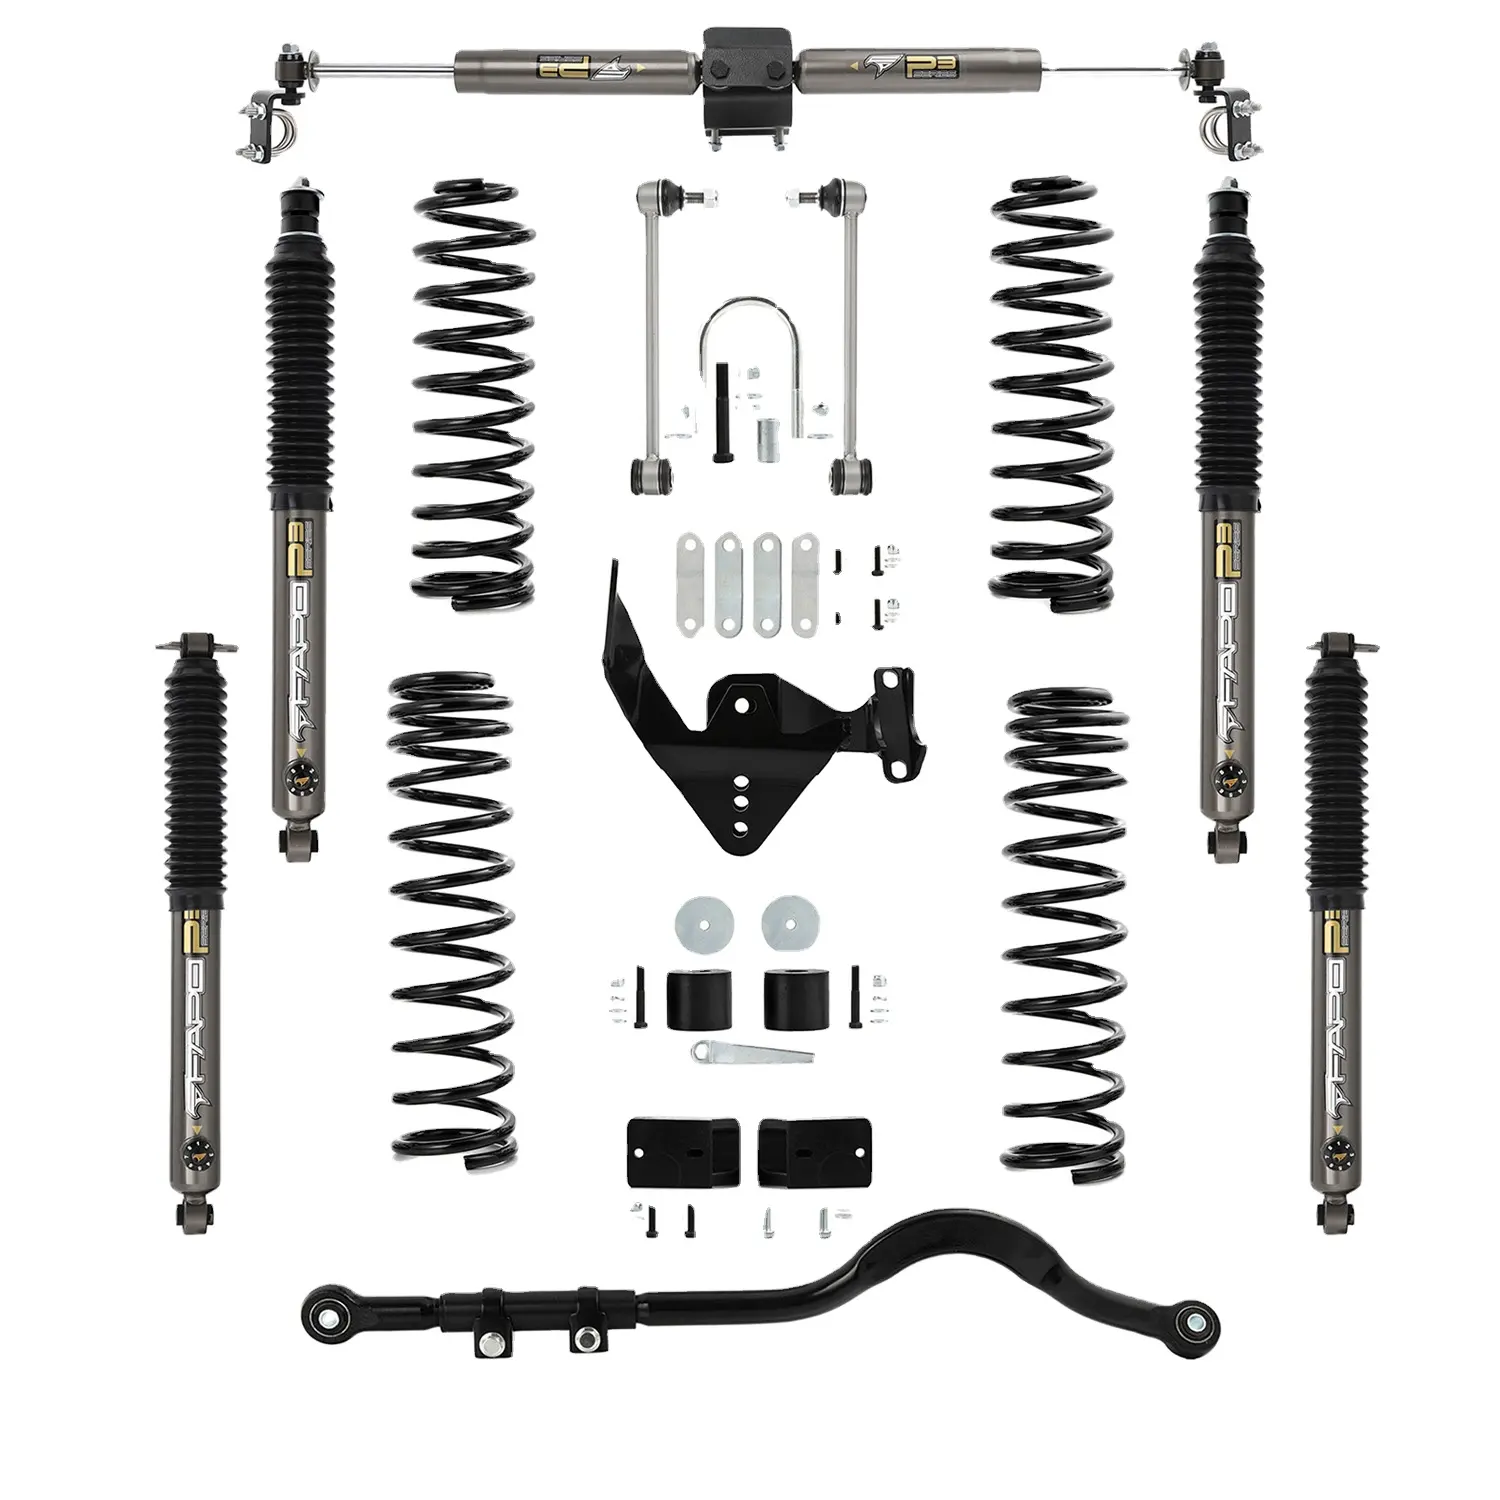 2.5" lift kit for Jeep Wrangler JK 2007-2018 performance suspension